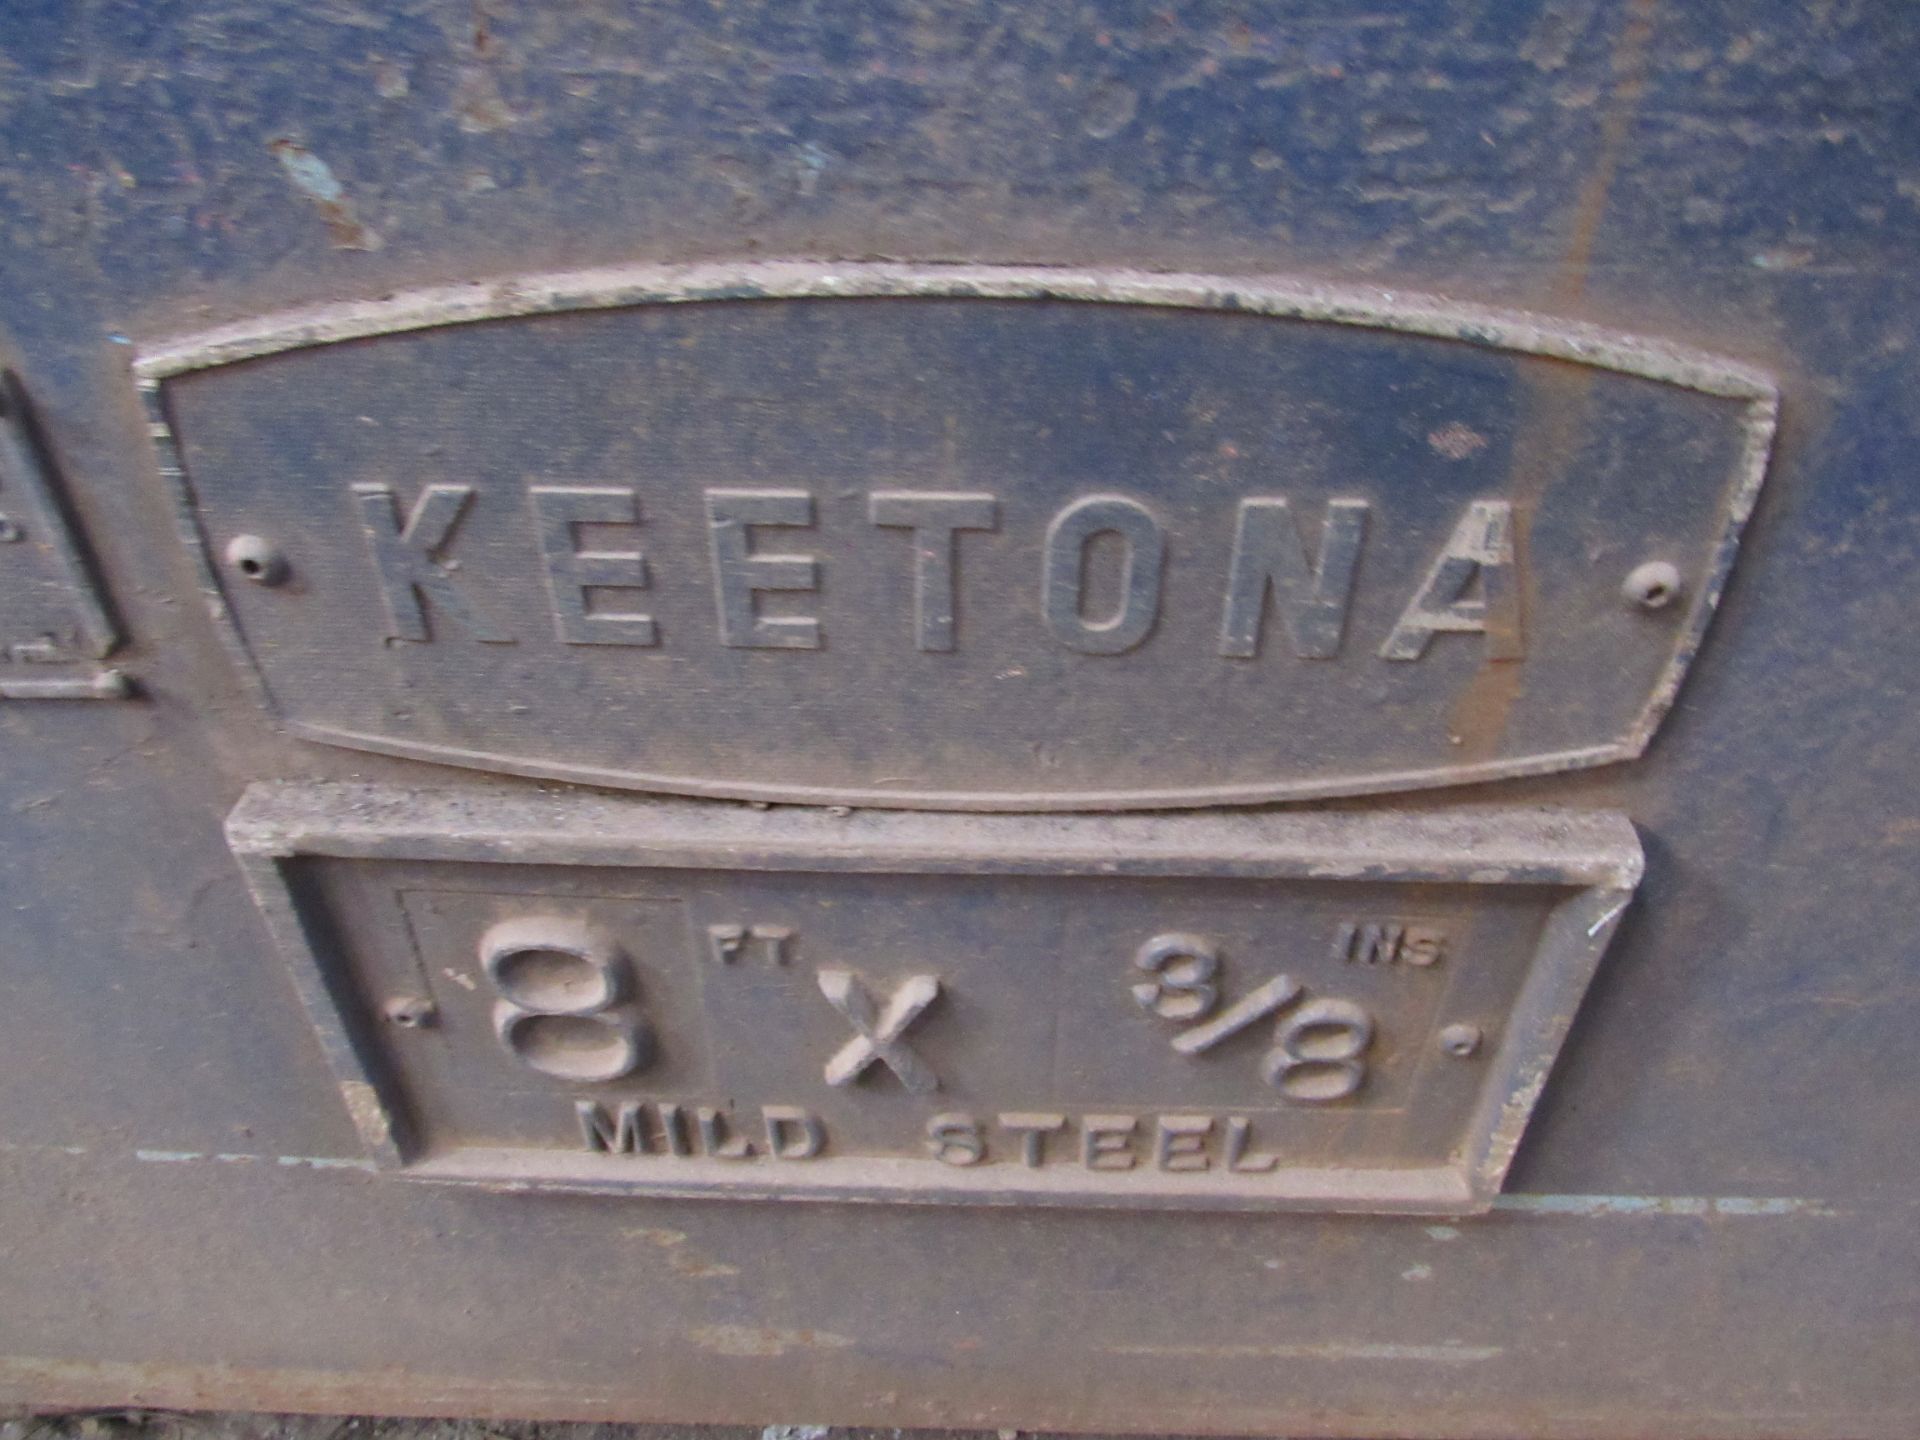 Keetona Powered Bending Rolls 2550mm, 8”x3/8” Mild Steel - Image 4 of 4